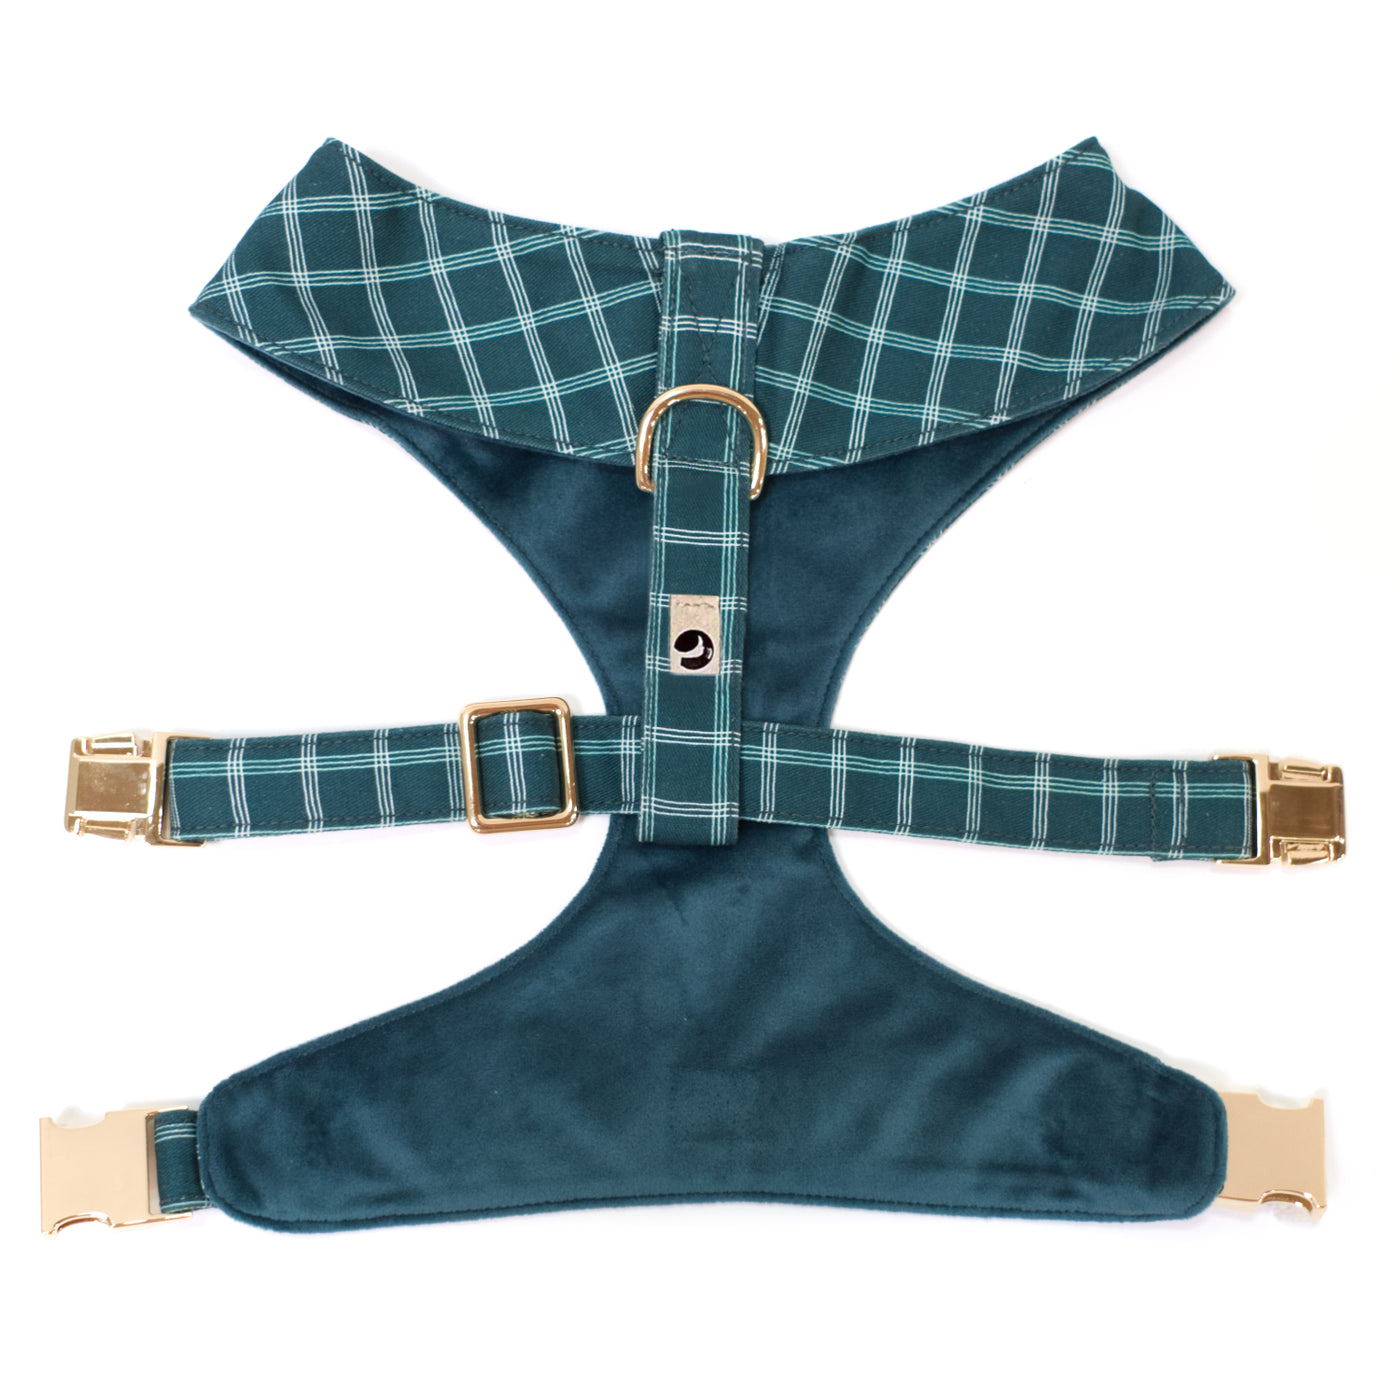 Turquoise windowpane plaid reversible dog harness with gold hardware.